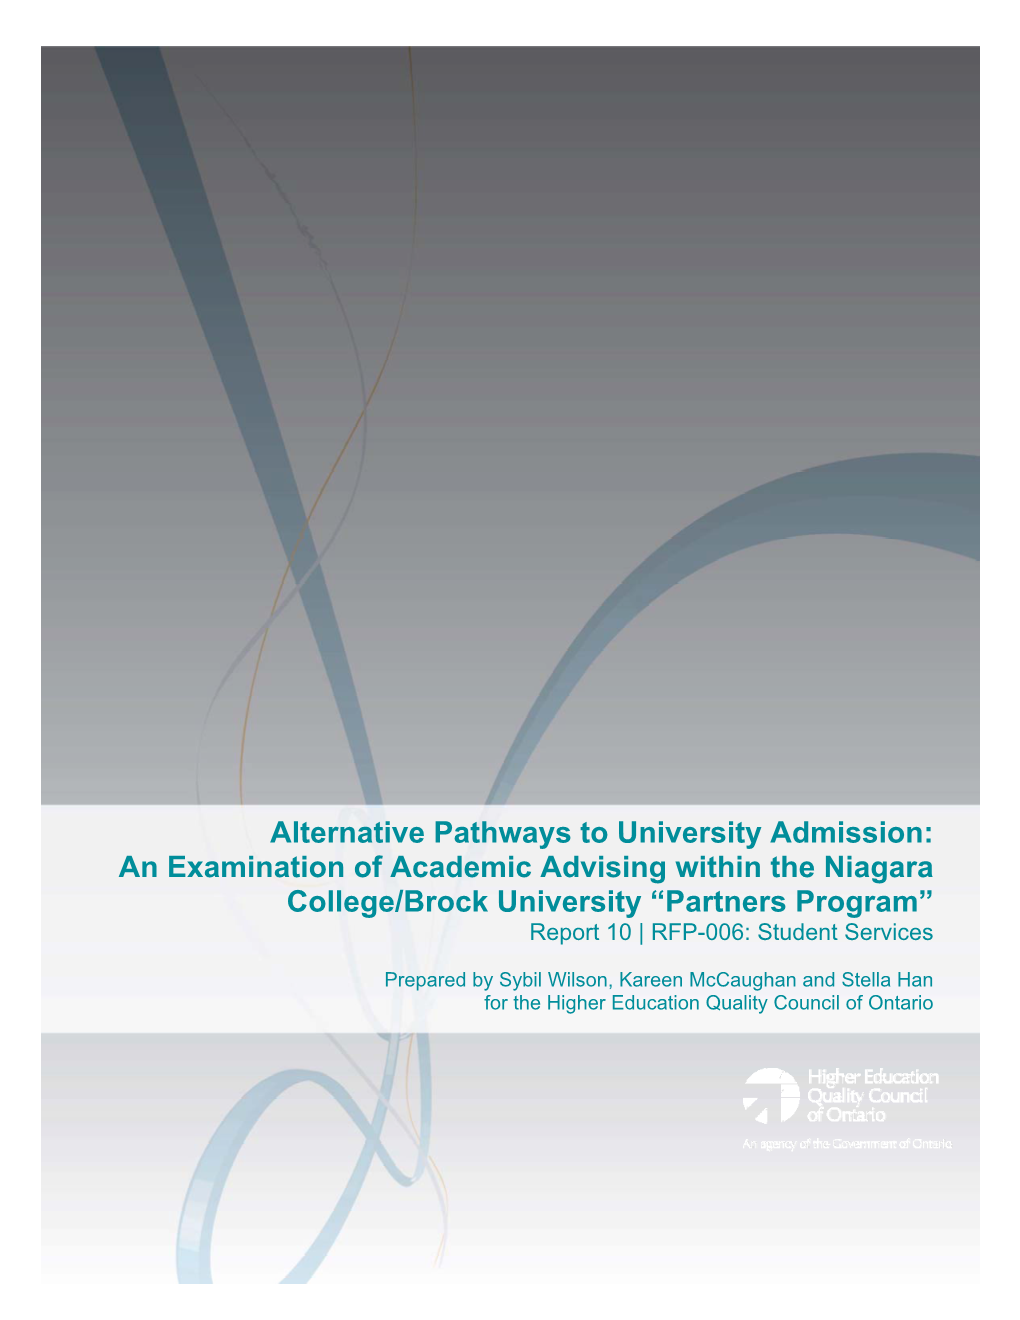 An Examination of Academic Advising Within the Niagara College/Brock University “Partners Program”